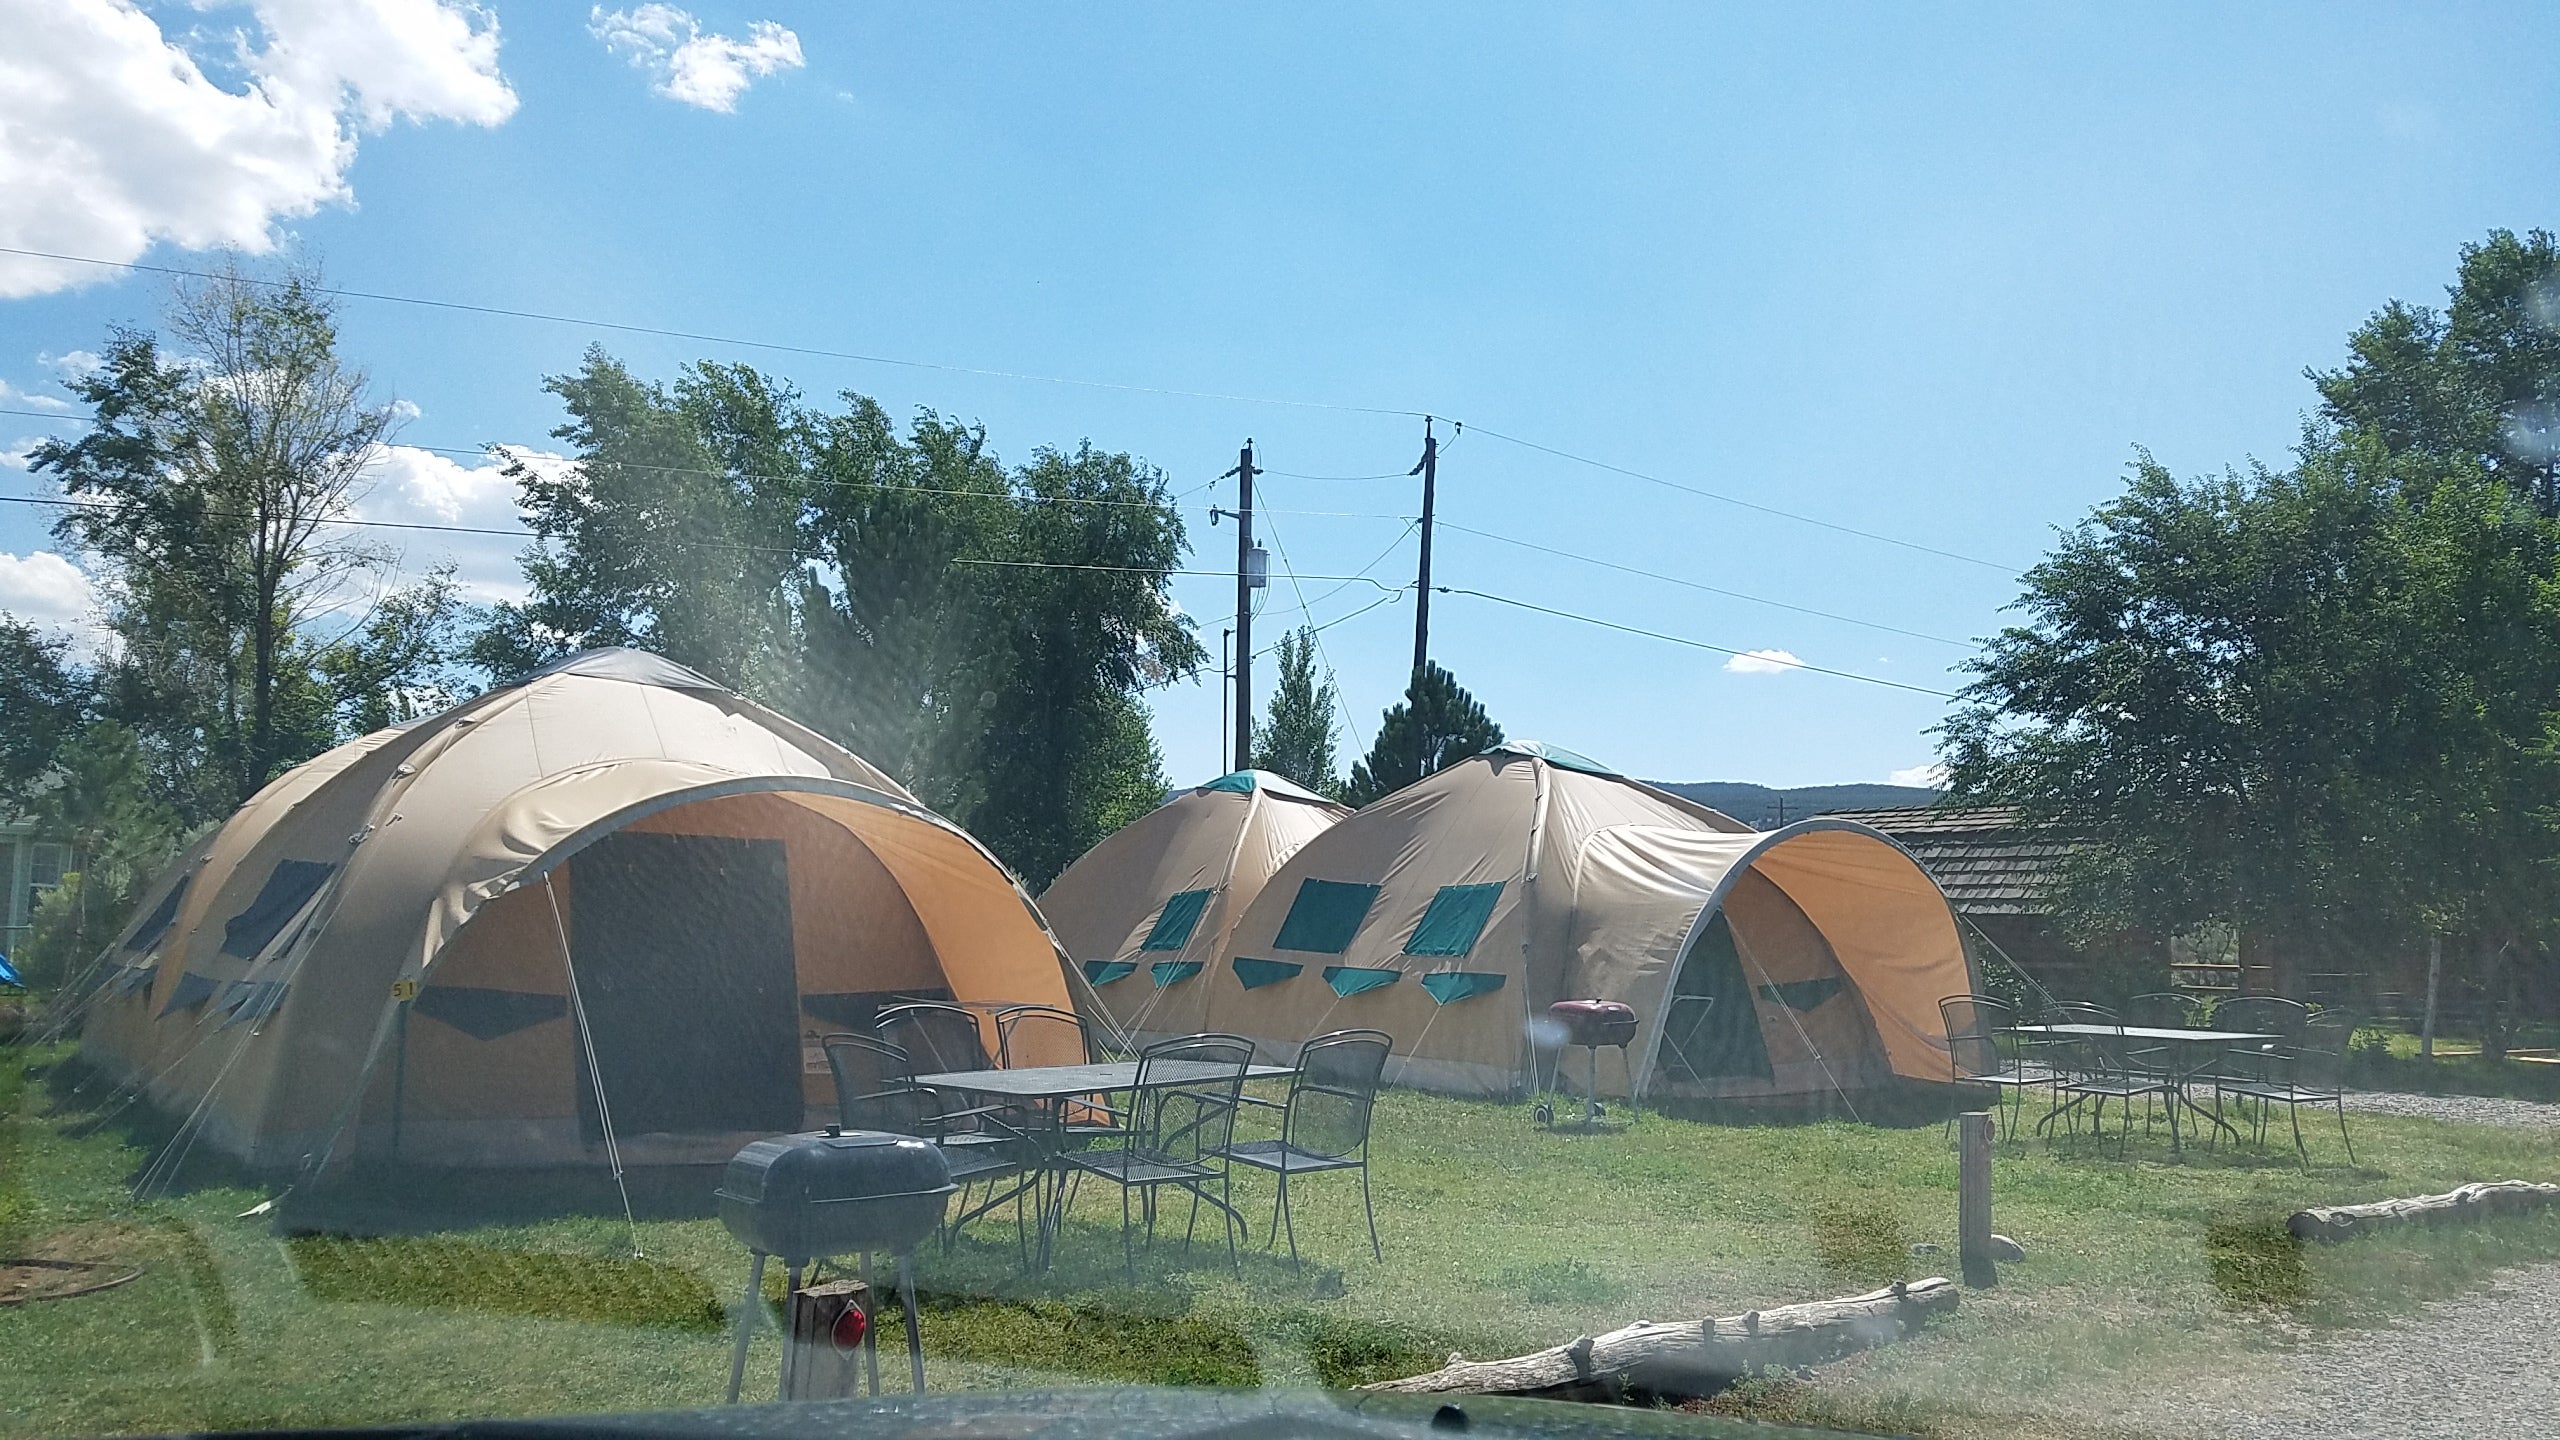 Pre-assembled tent structures